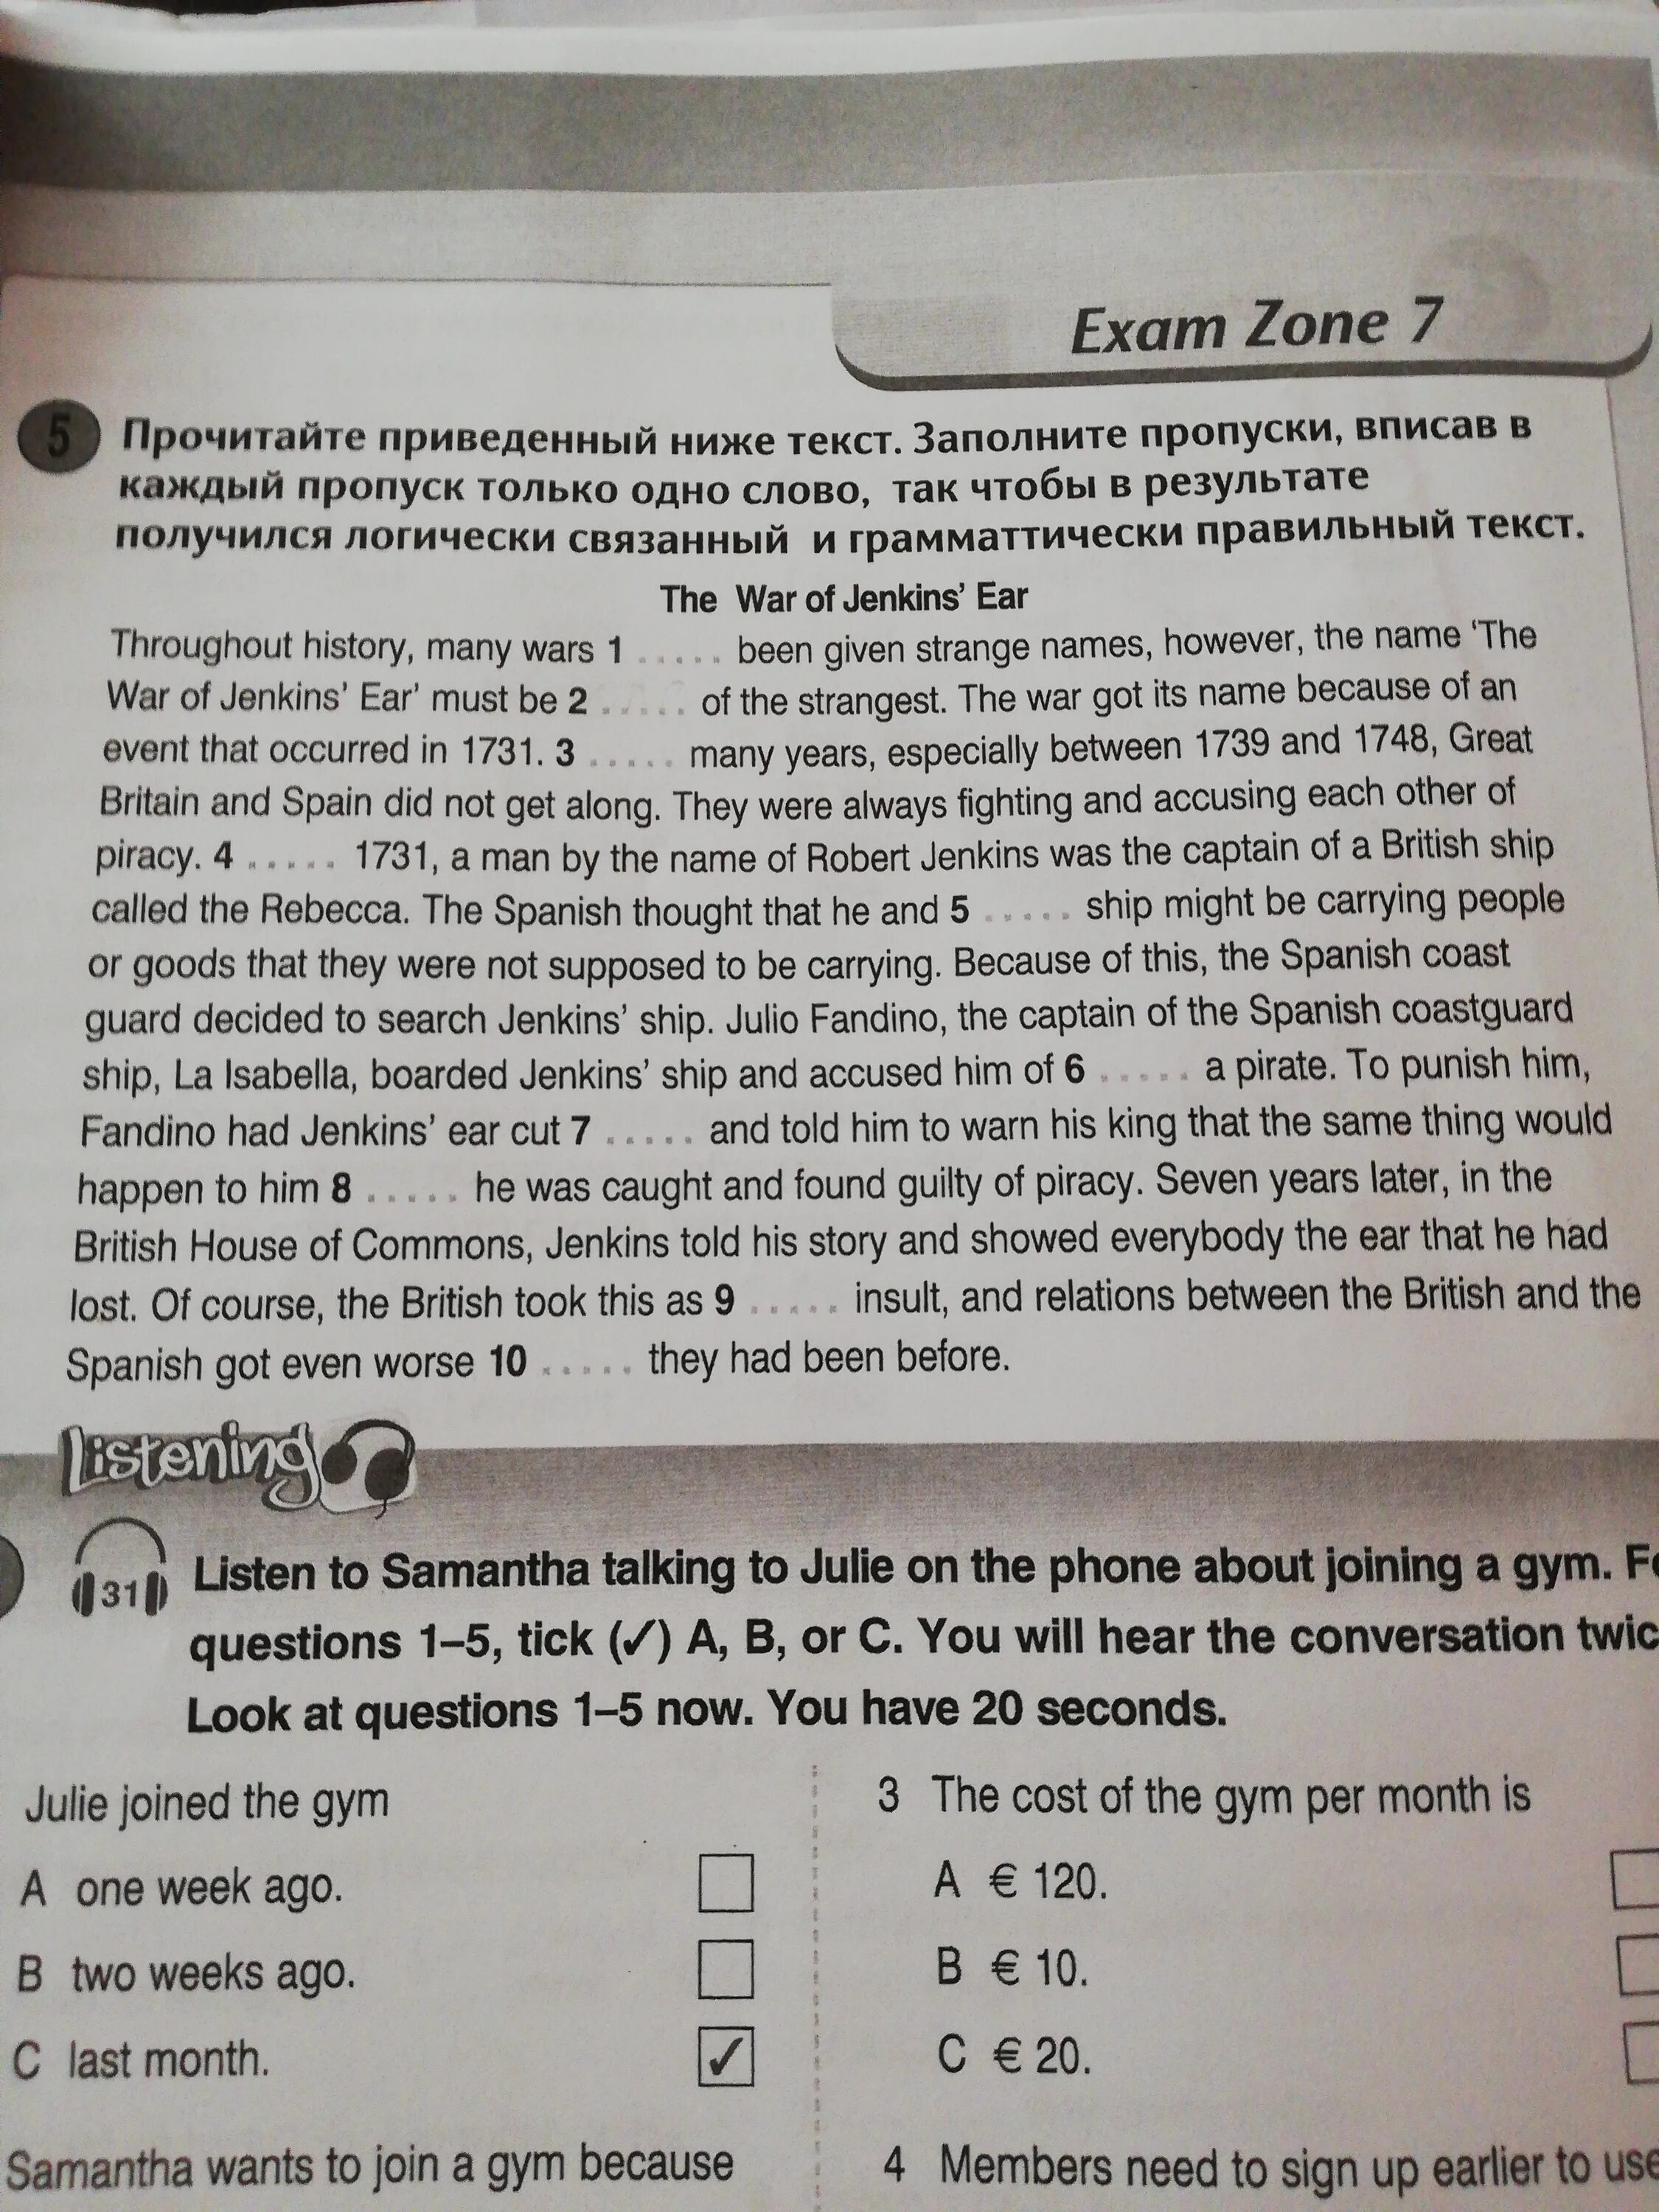 4exam ru test. Exam Zone 1 Round up 4 номер 5. Round up 4 Exam Zone 1. Round up 4 Exam Zone 7. Round up 4 Exam Zone 5 ответы.